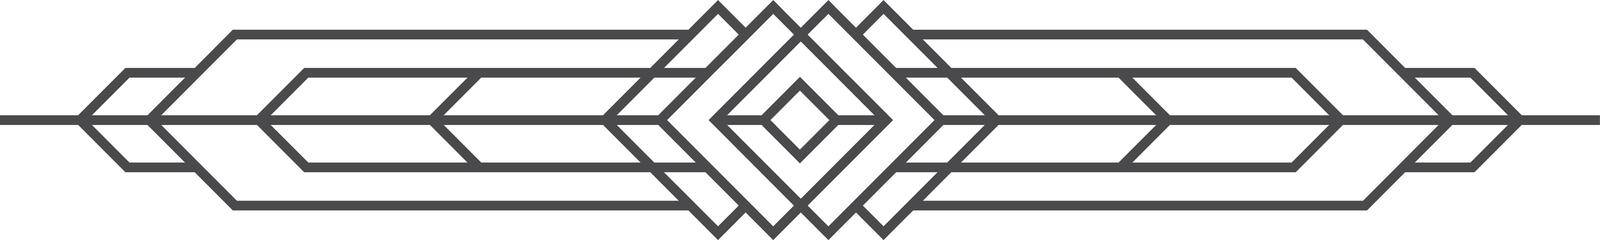 Ornament geometric header, filigree logo decor picture isolated on white background